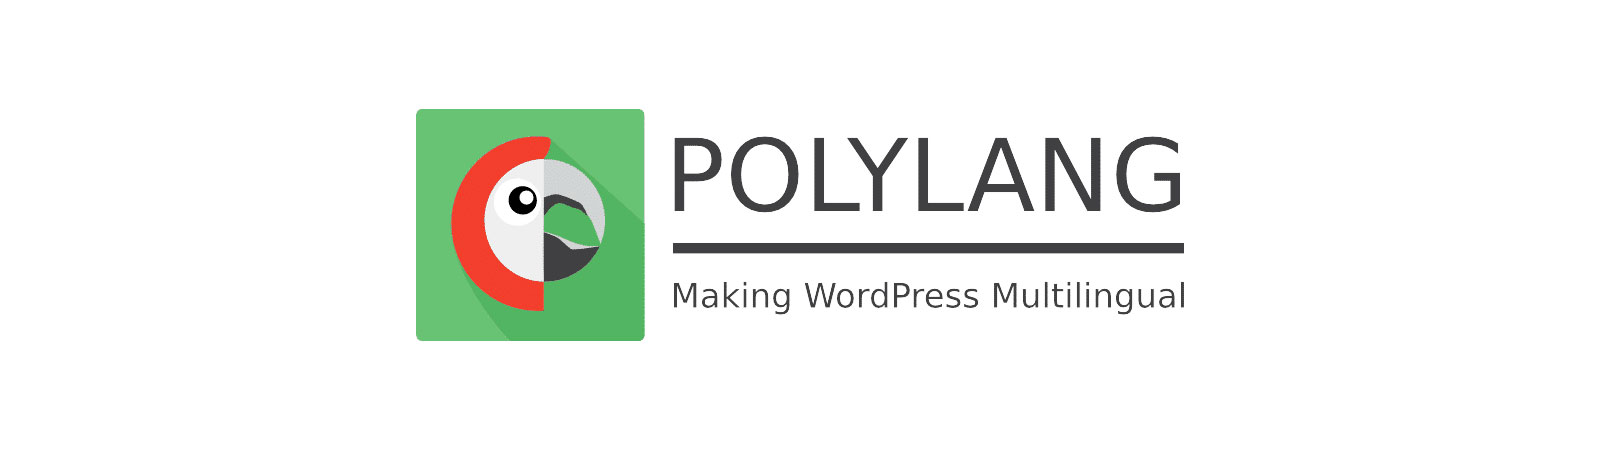 I migliori plugin multilingue per WordPress : Polylang